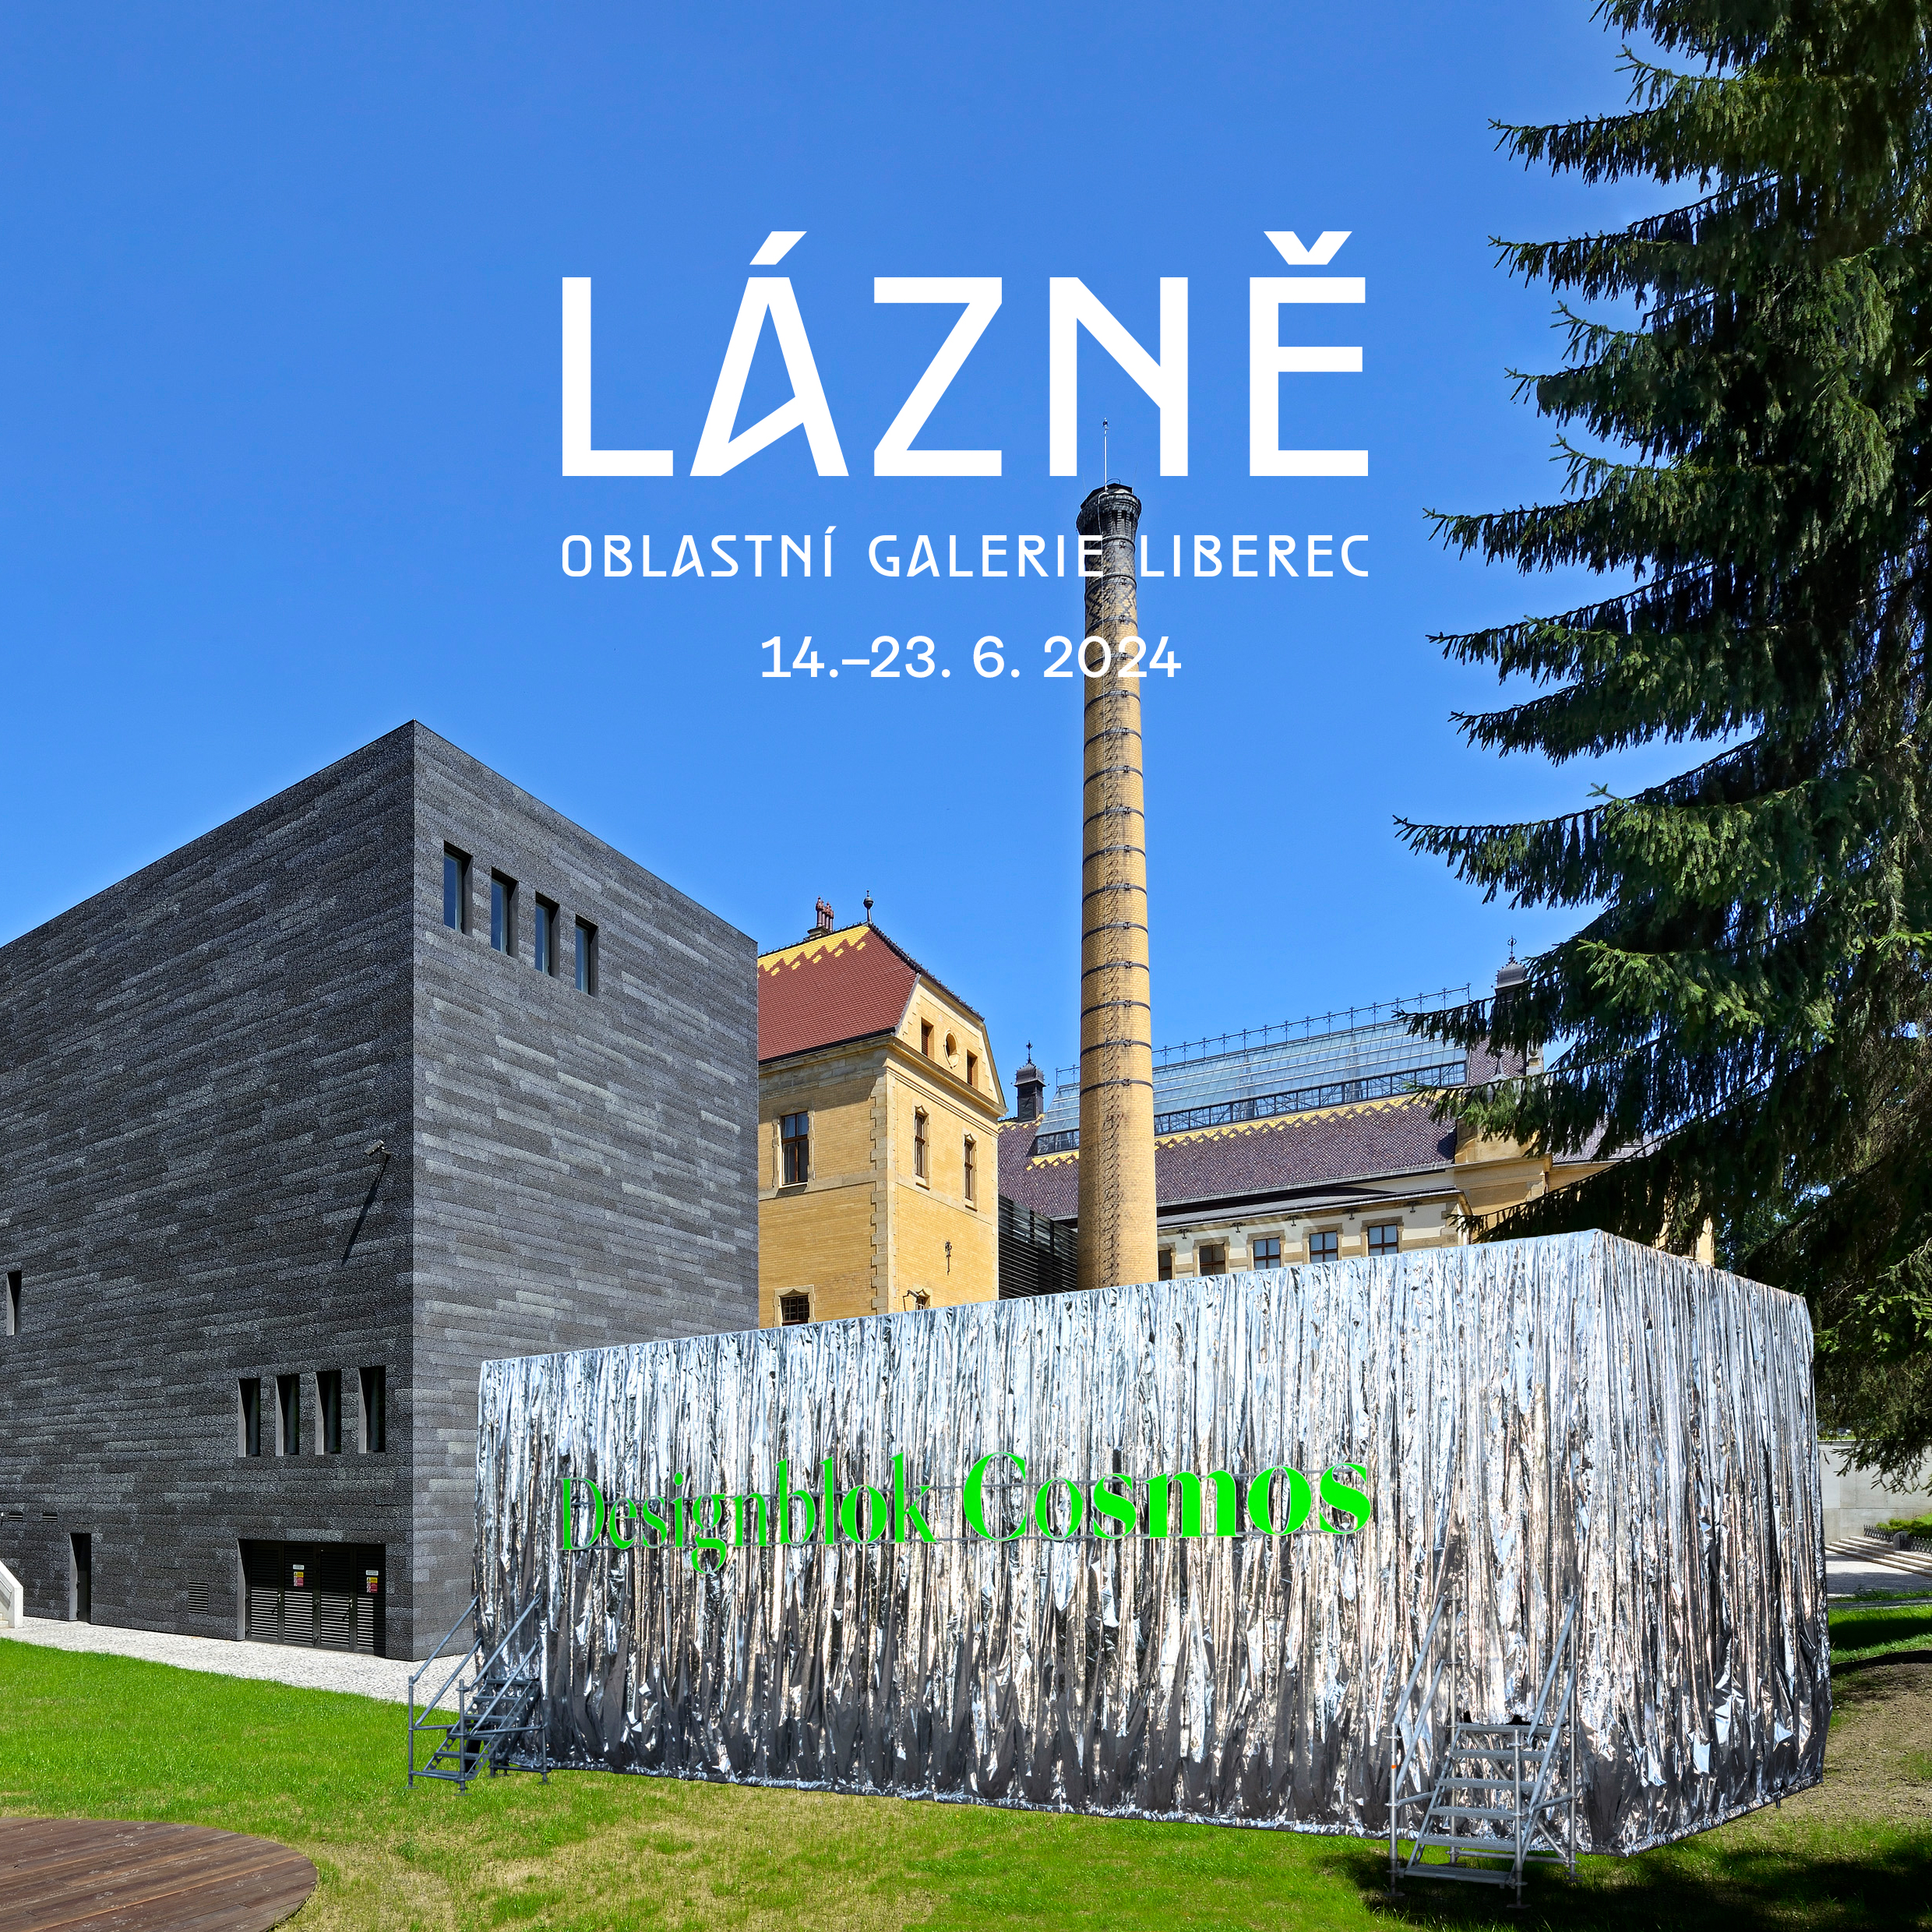 From Prague through Milan to Liberec, Designblok Cosmos will park at the Regional Gallery Liberec